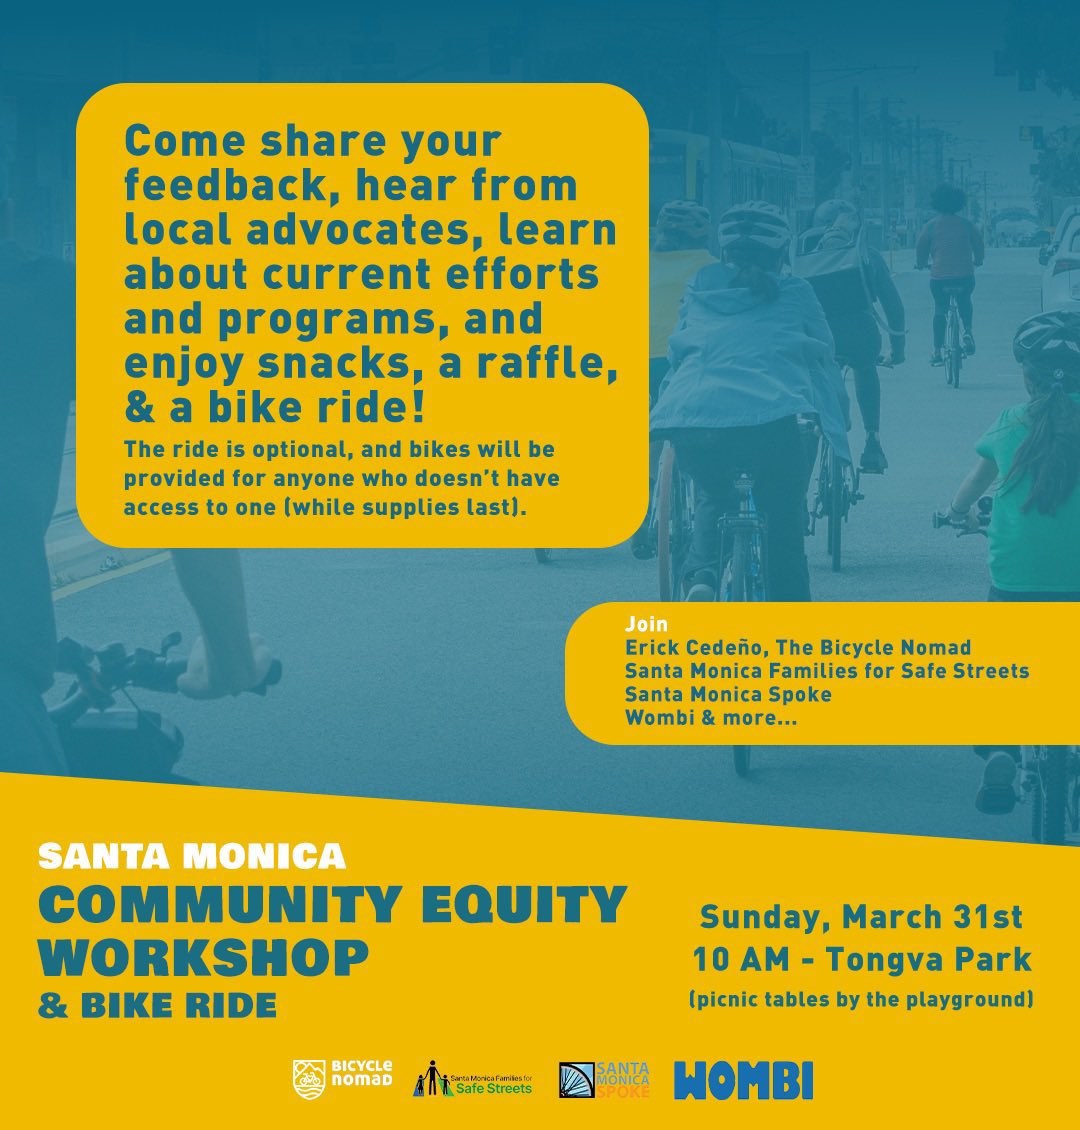 Santa Monica Community Equity Workshop & Bike Ride, Sunday, March 31, 10 AM - Tongva Park #SafeRoutesToParks #ParkEquity